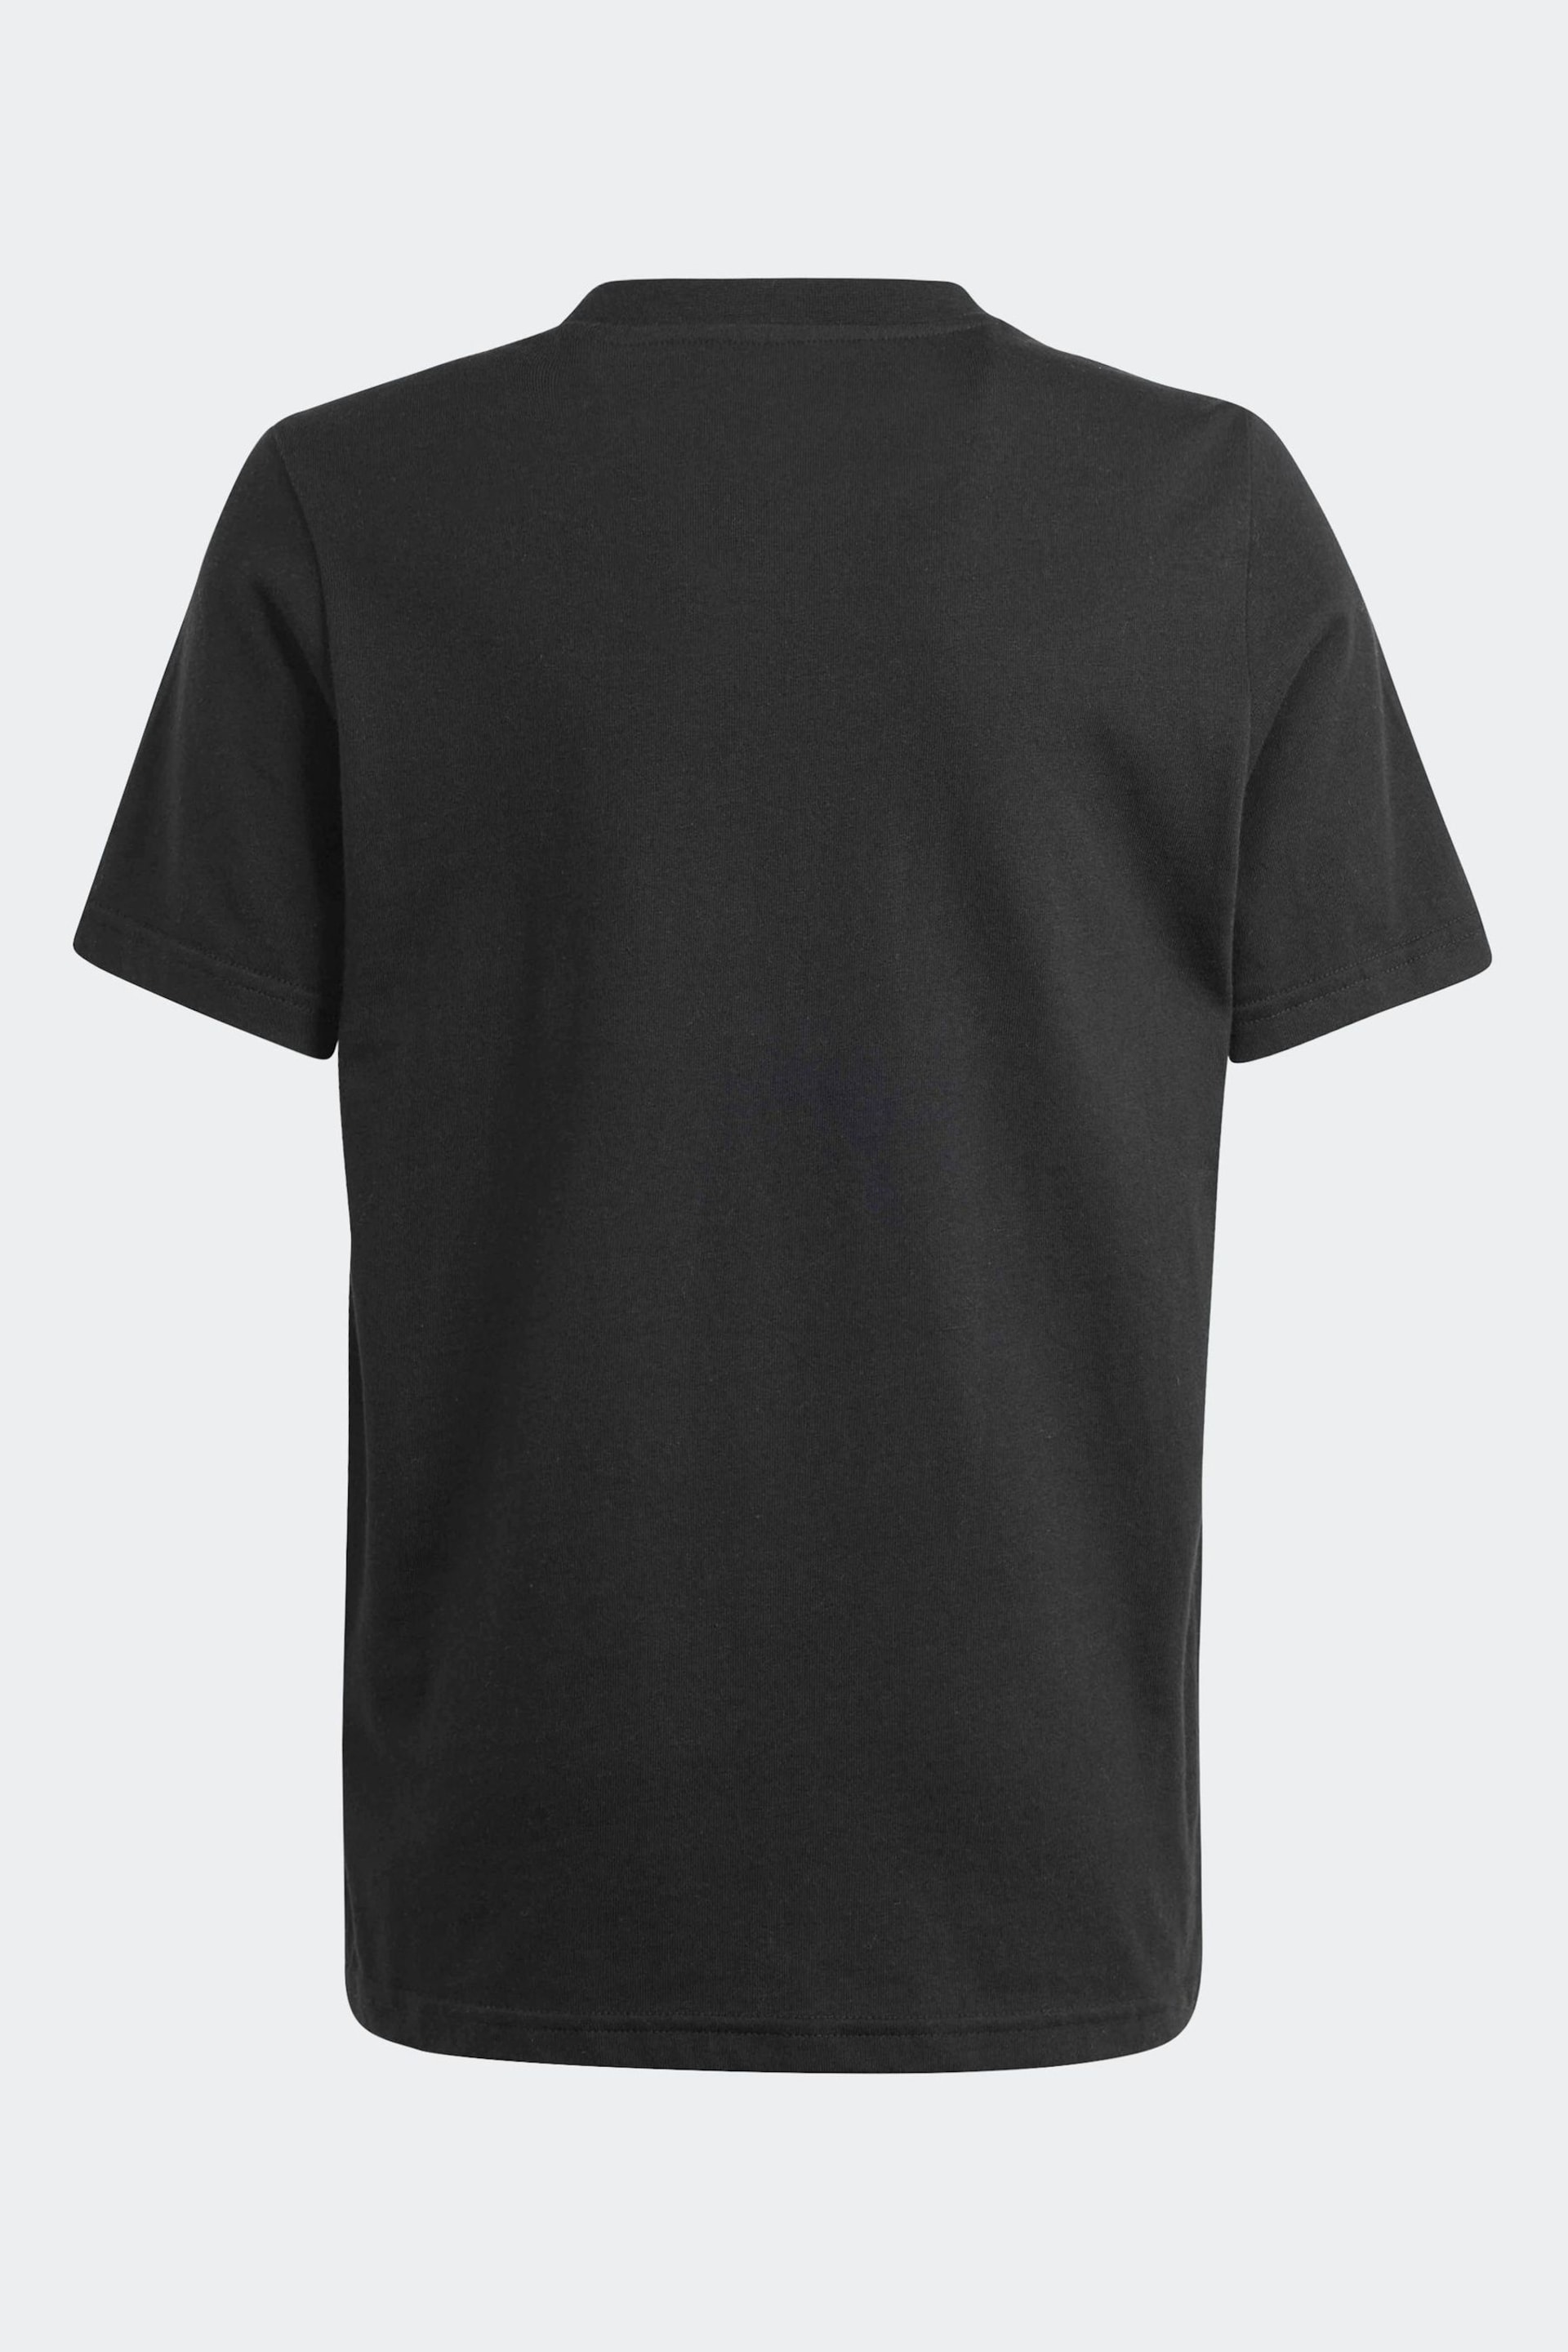 adidas Black Kids Sportswear Camo Linear Graphic T-Shirt - Image 2 of 5